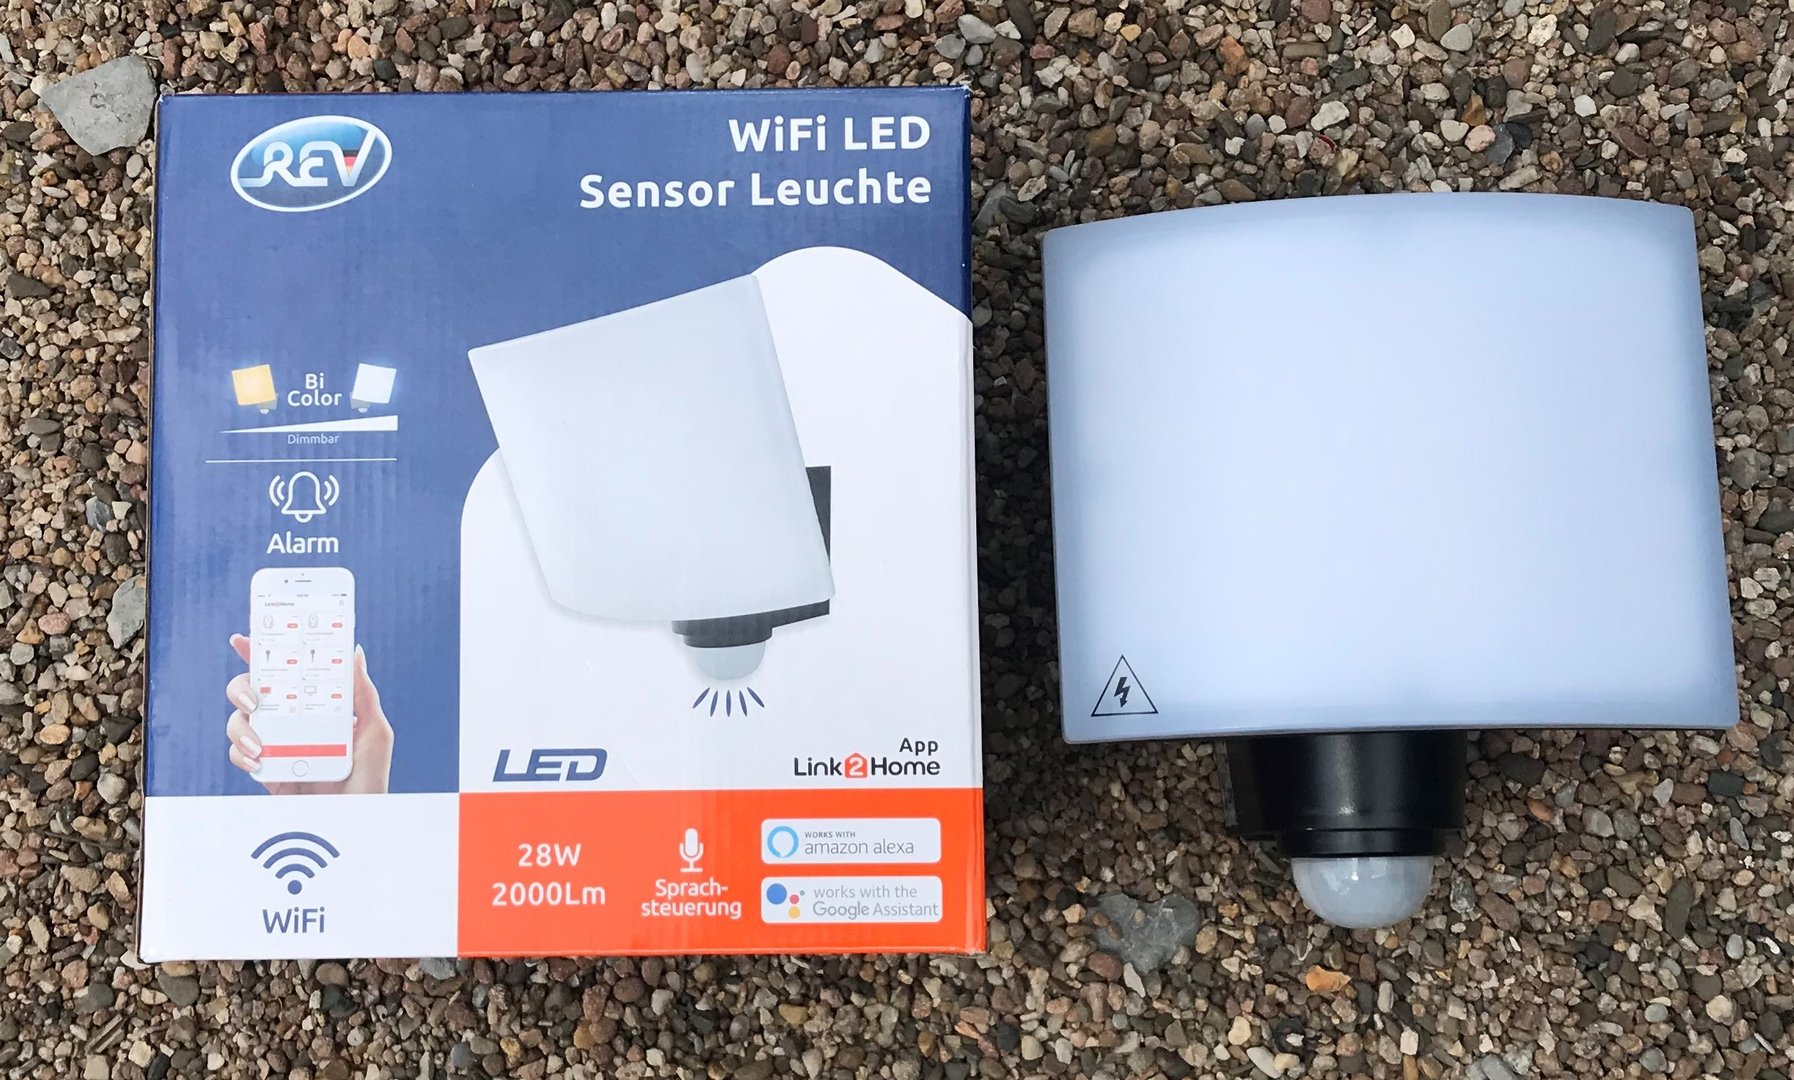 Wifi LED Sensor Leuchte Steuerung via Smartphone 28W IP44 REV